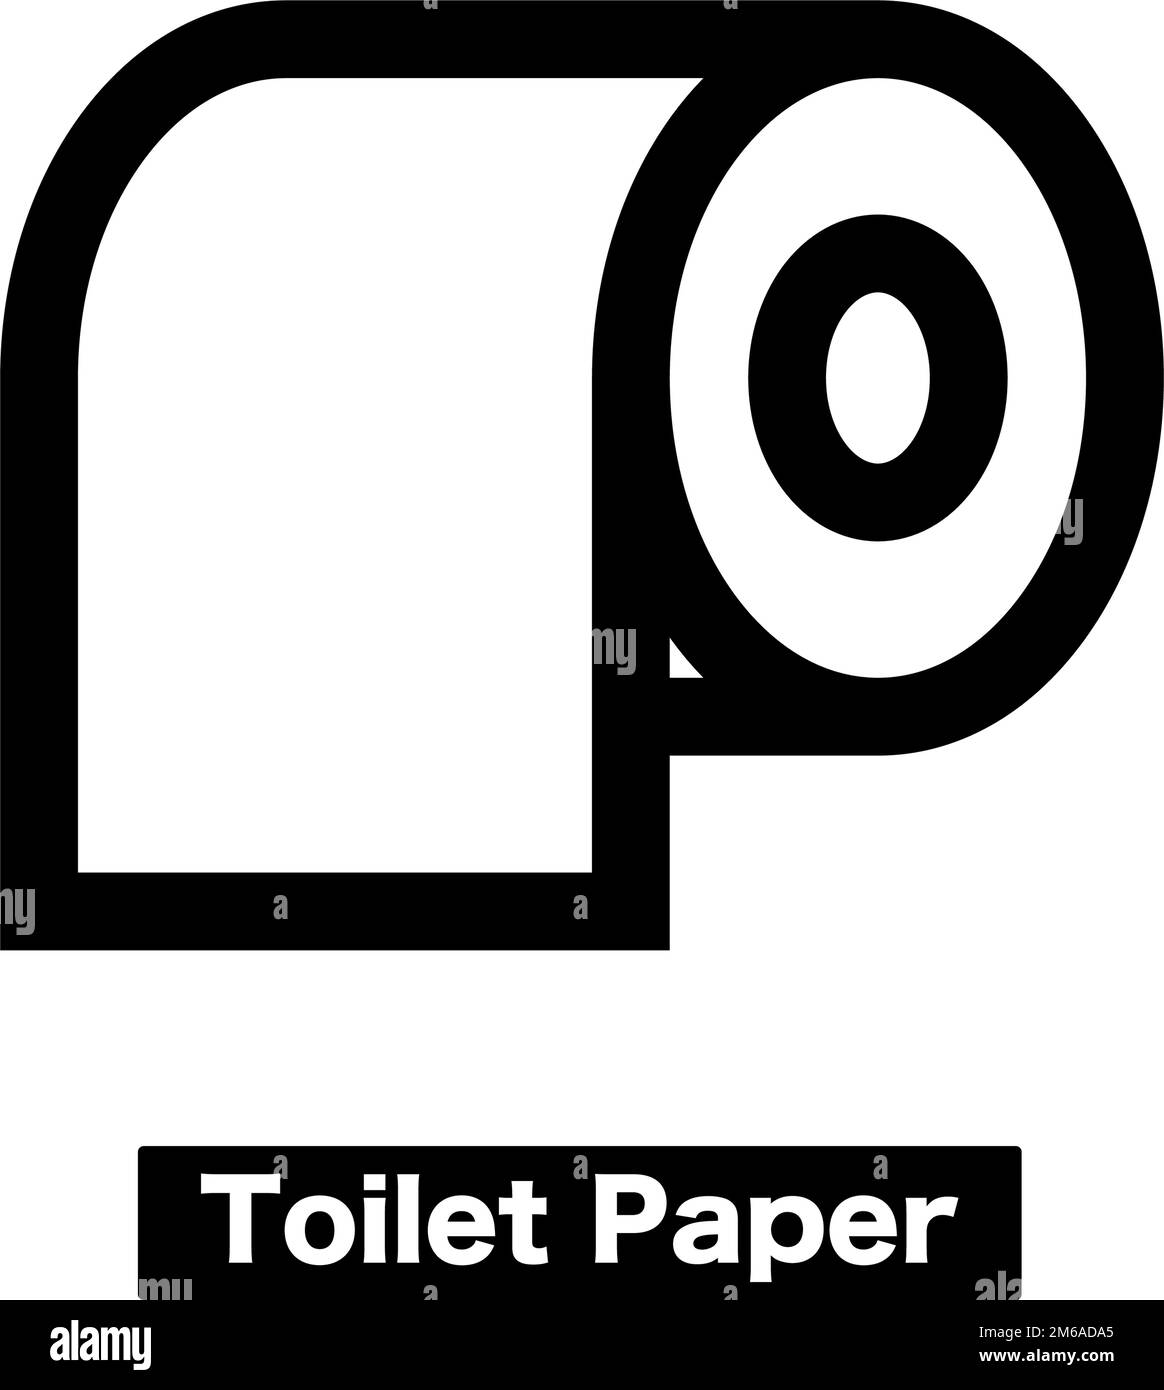 Toilet paper icon and logo. Editable vector. Stock Vector